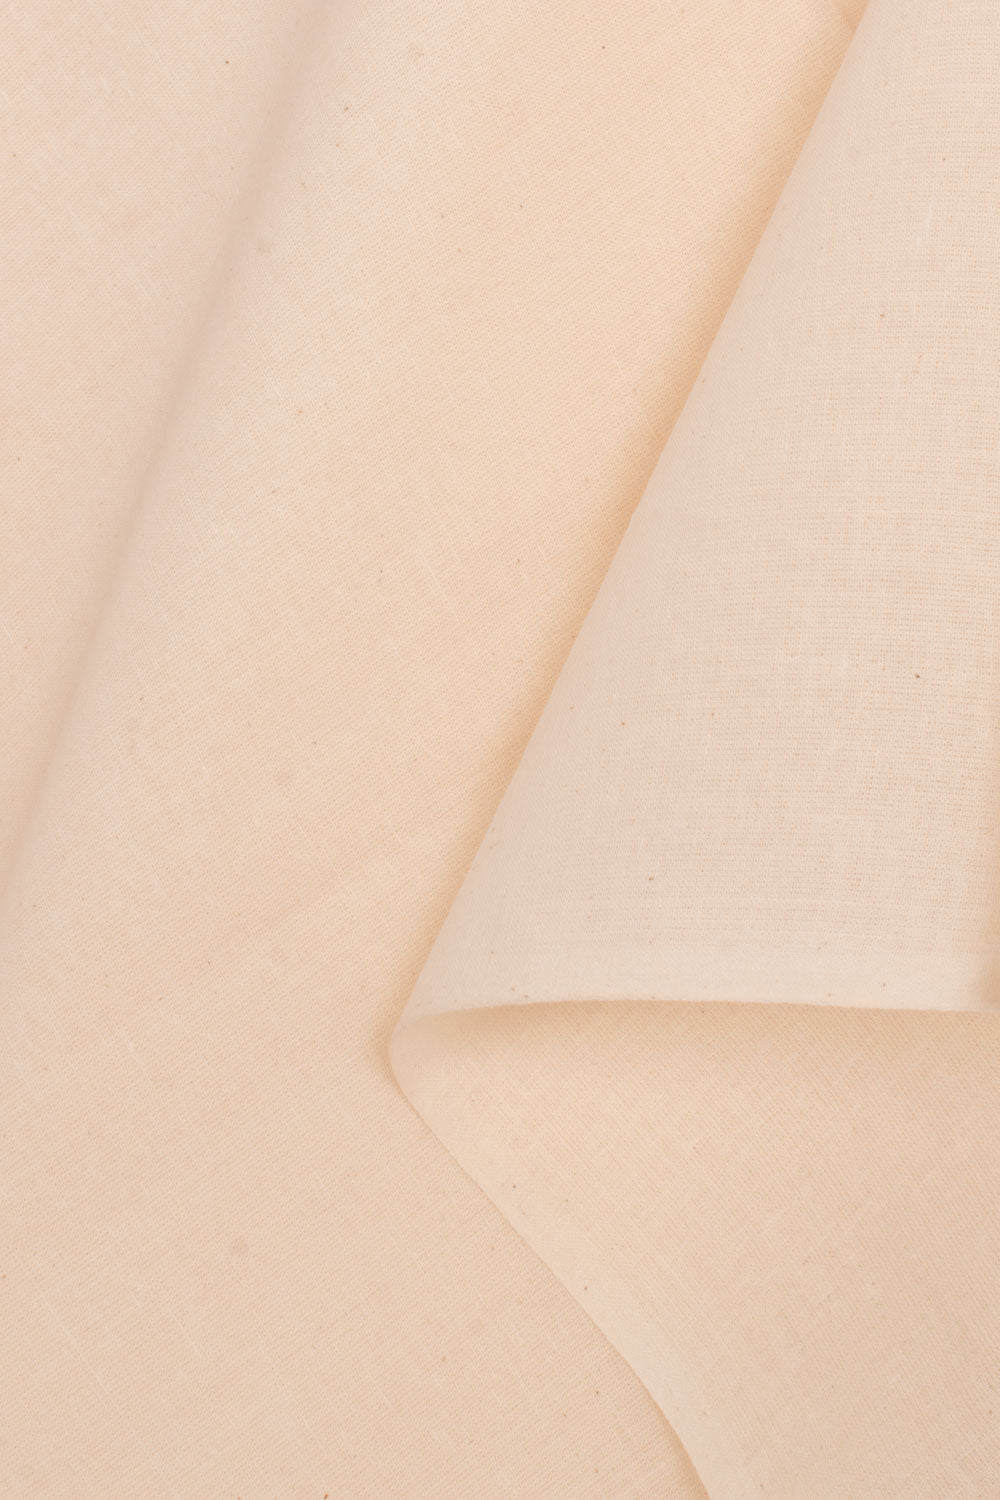 Handloom Ikat Cotton 3-Piece Salwar Suit Material 10058811